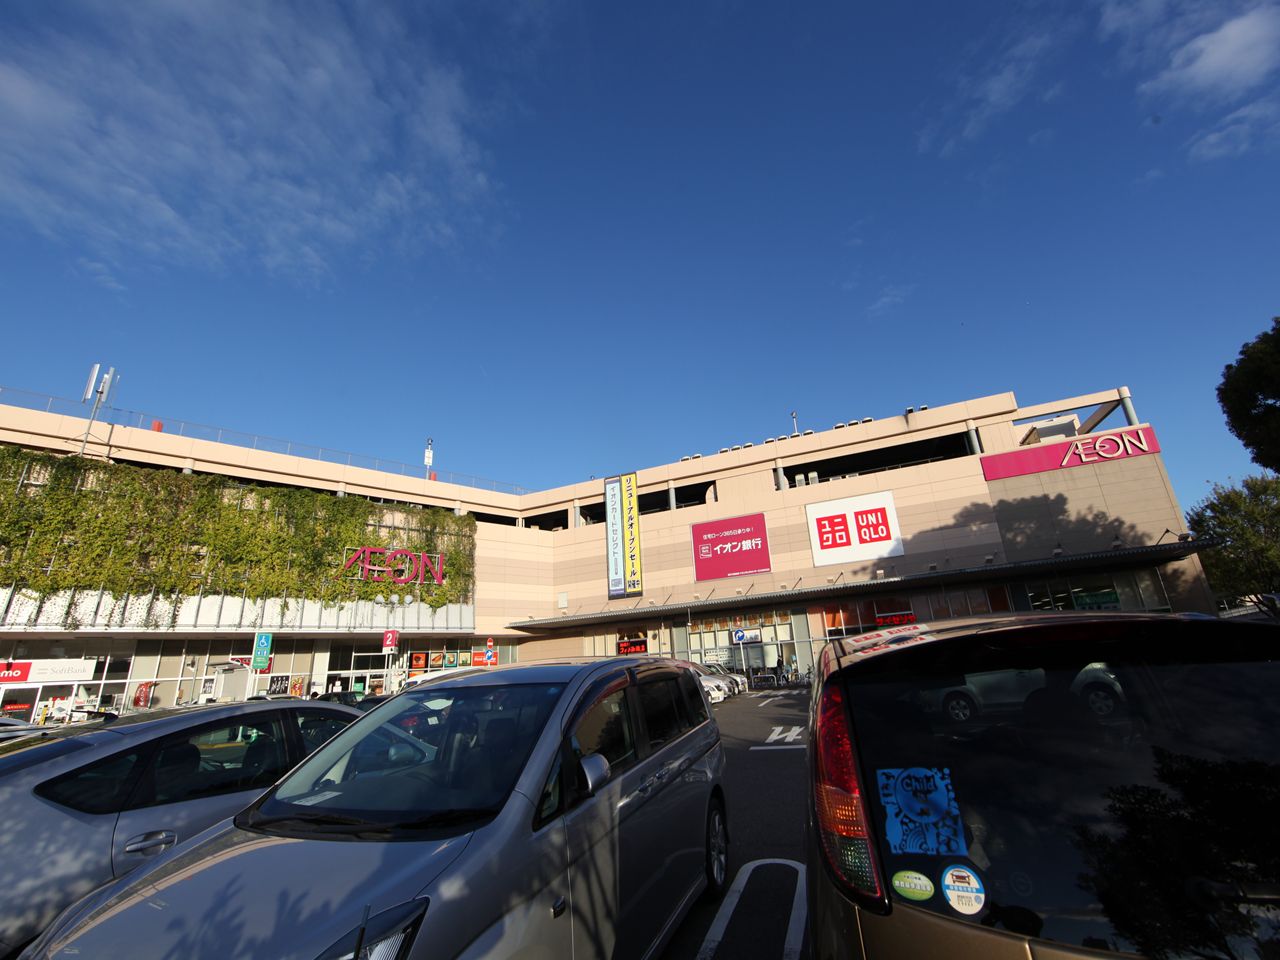 Shopping centre. 318m until ion Town Chikusa (24-hour Super) (shopping center)